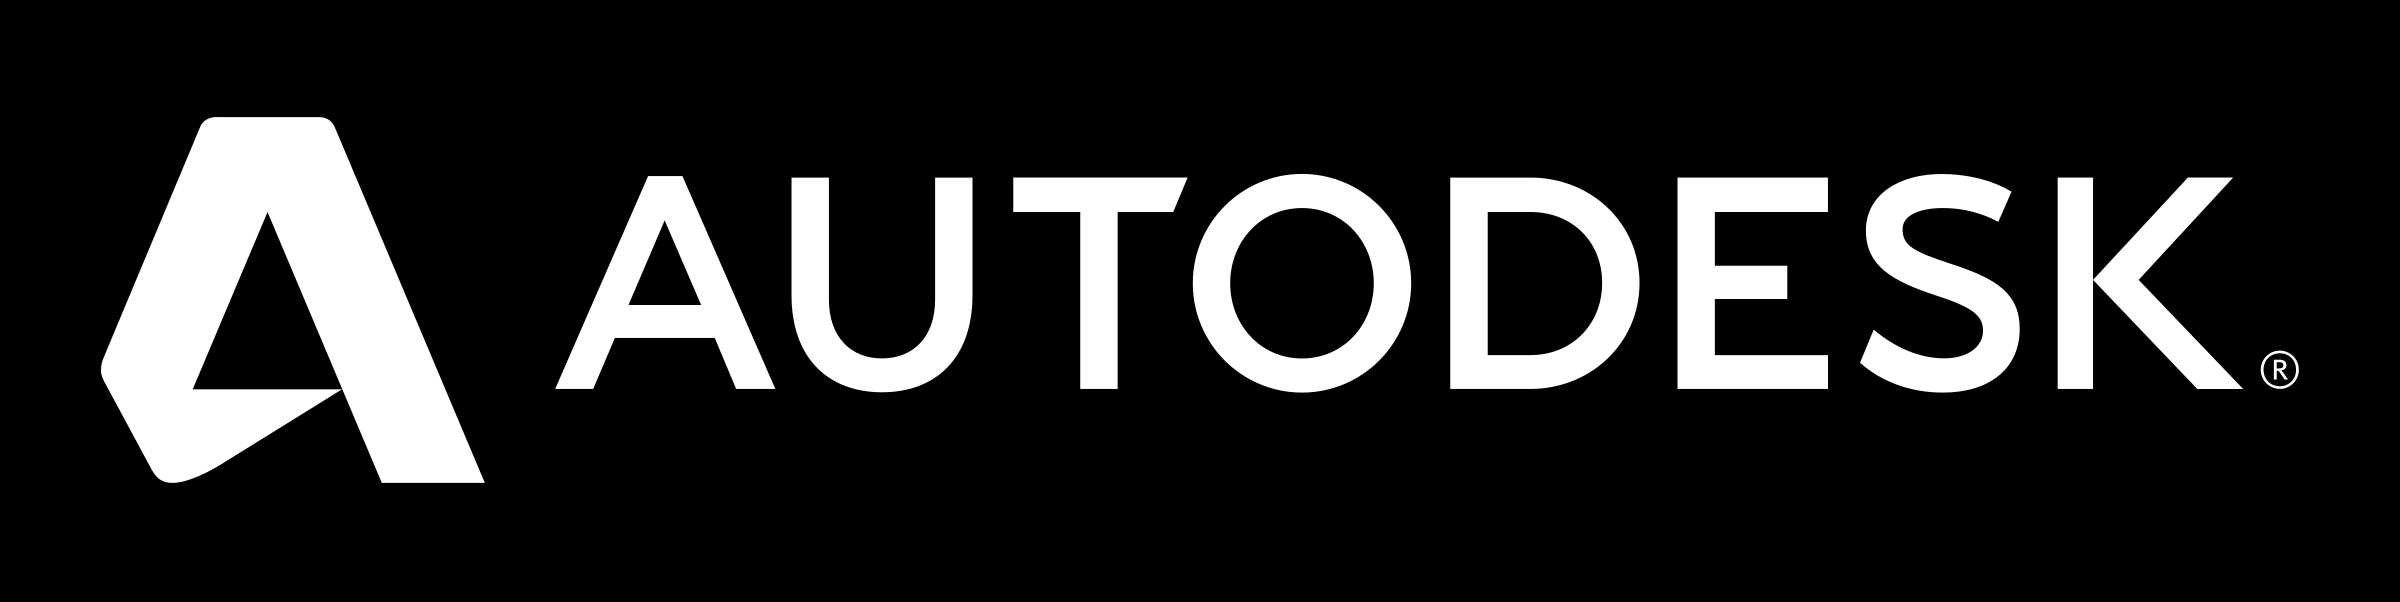 Autodesk Logo - Autodesk Logo PNG Transparent & SVG Vector - Freebie Supply